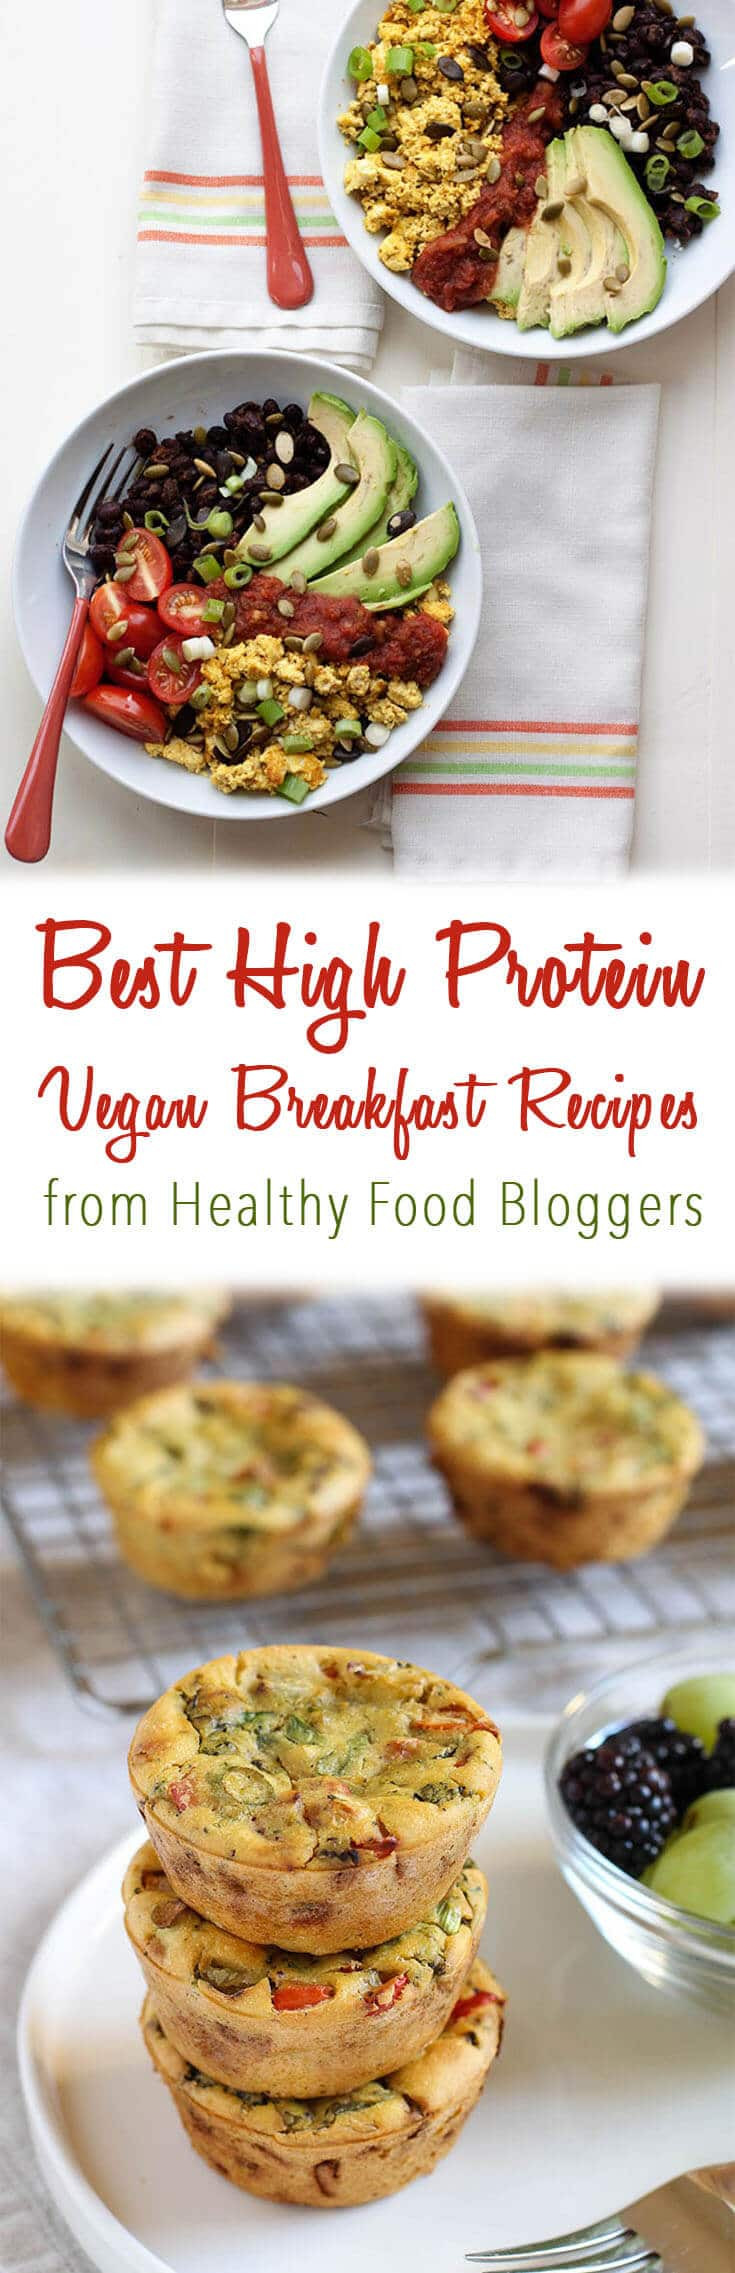 Vegan Breakfast Recipes Plant Based
 Best High Protein Vegan Breakfast Recipes from Healthy